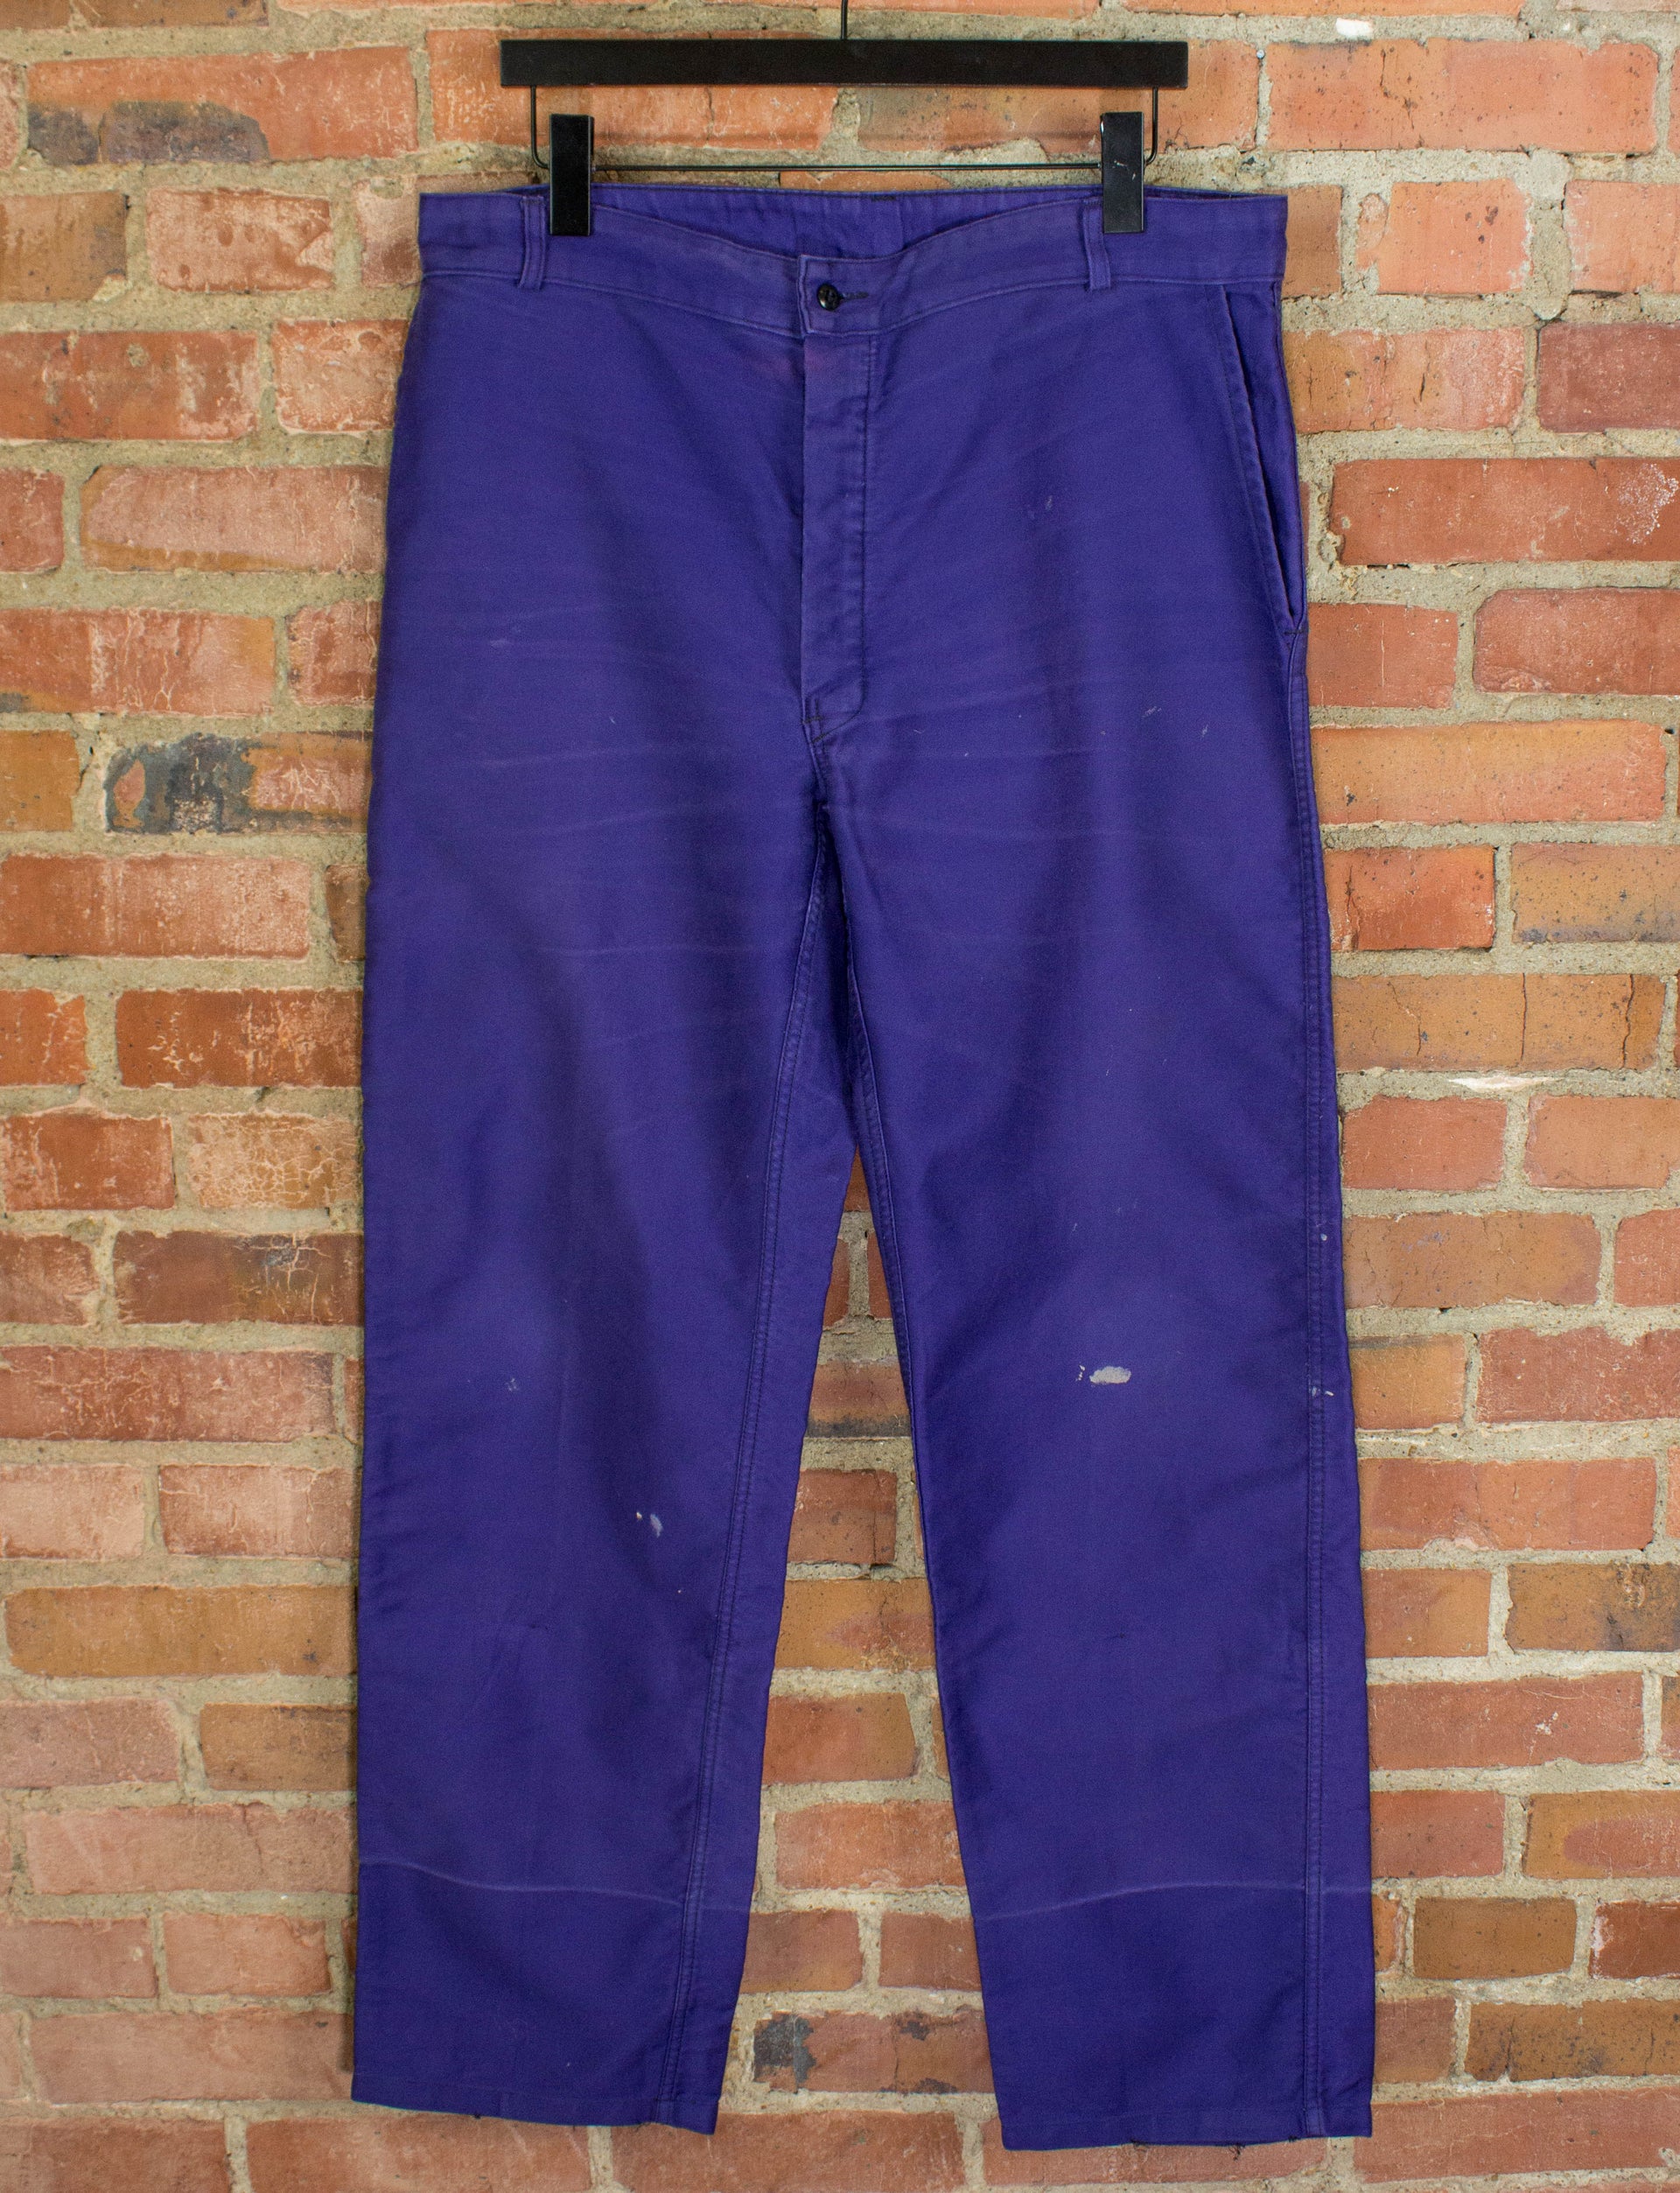 Vintage 70s Suede Front Lacing Fringe Purple and Red Bellbottom Pants  Unisex 26/28x29